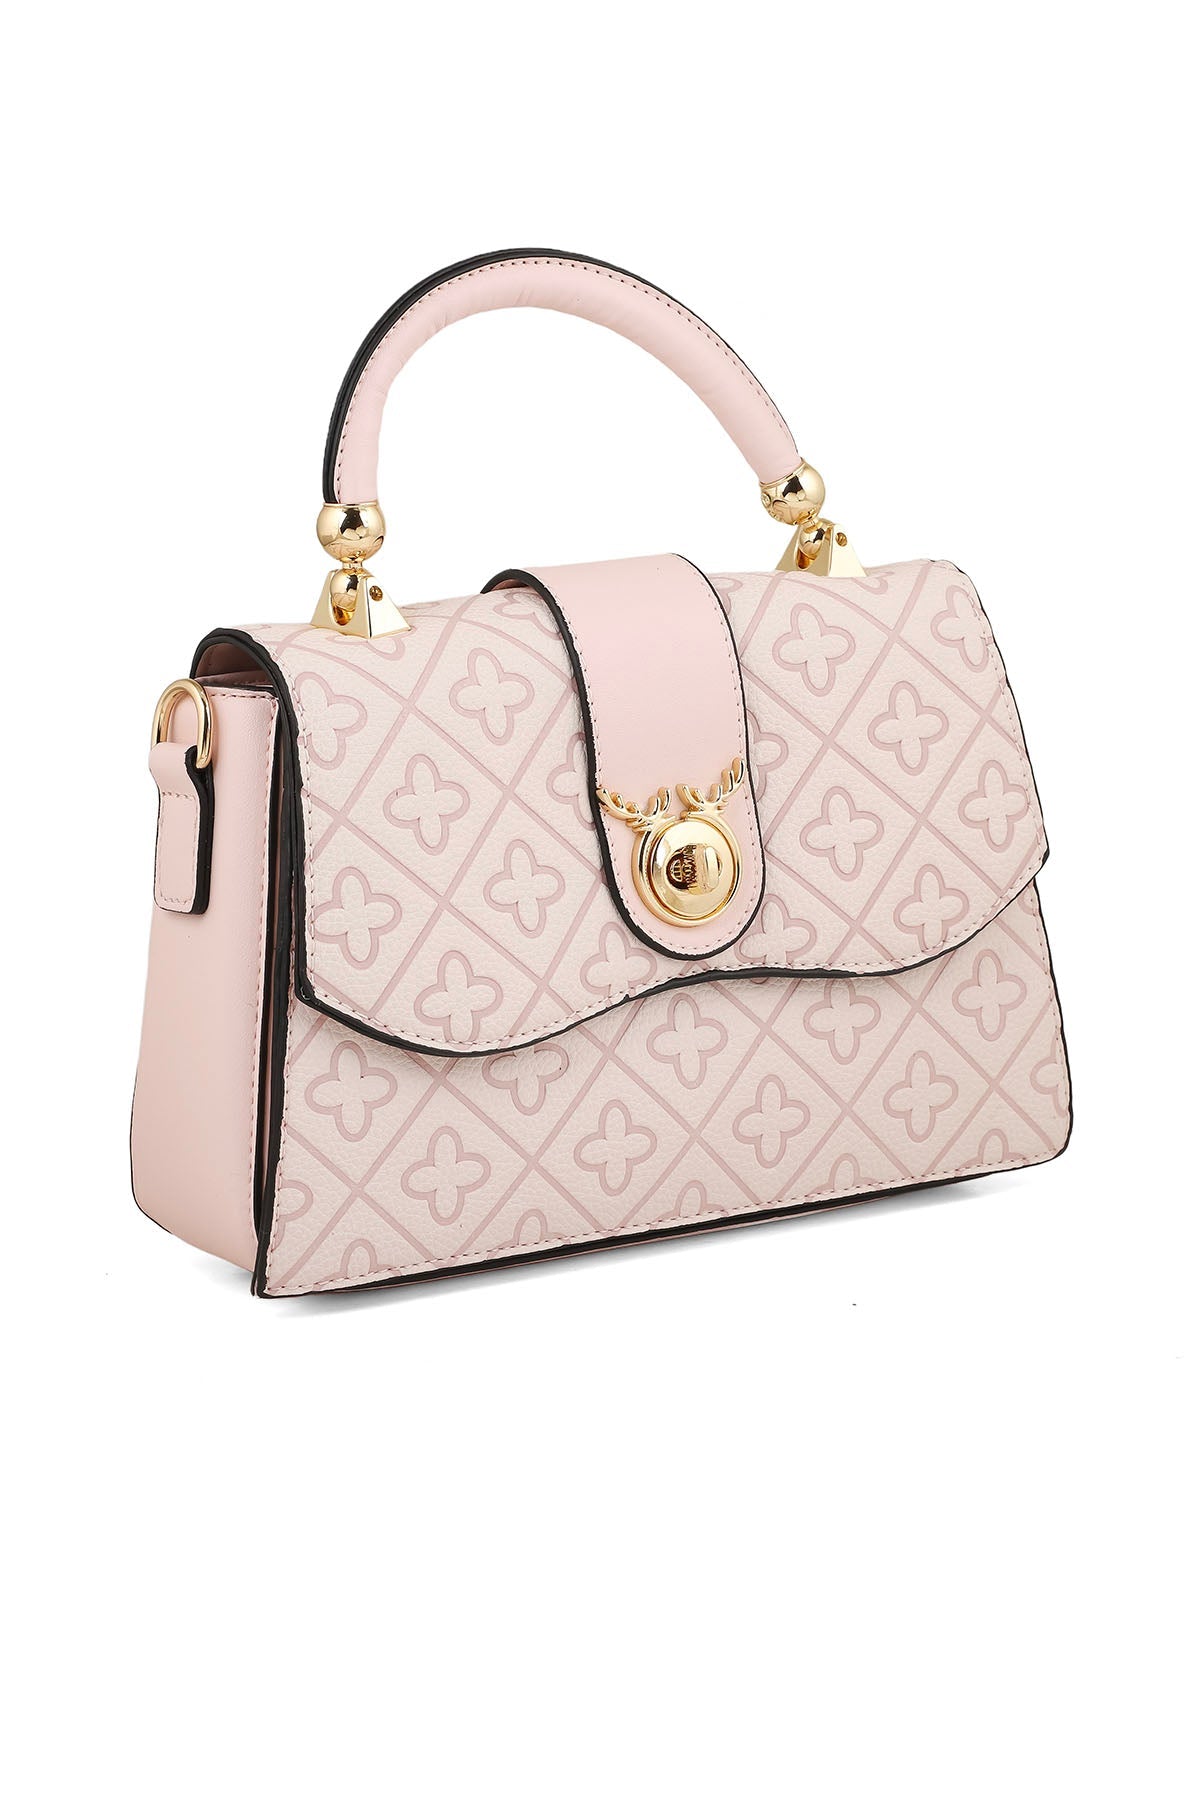 Top Handle Hand Bags B15082-Pink